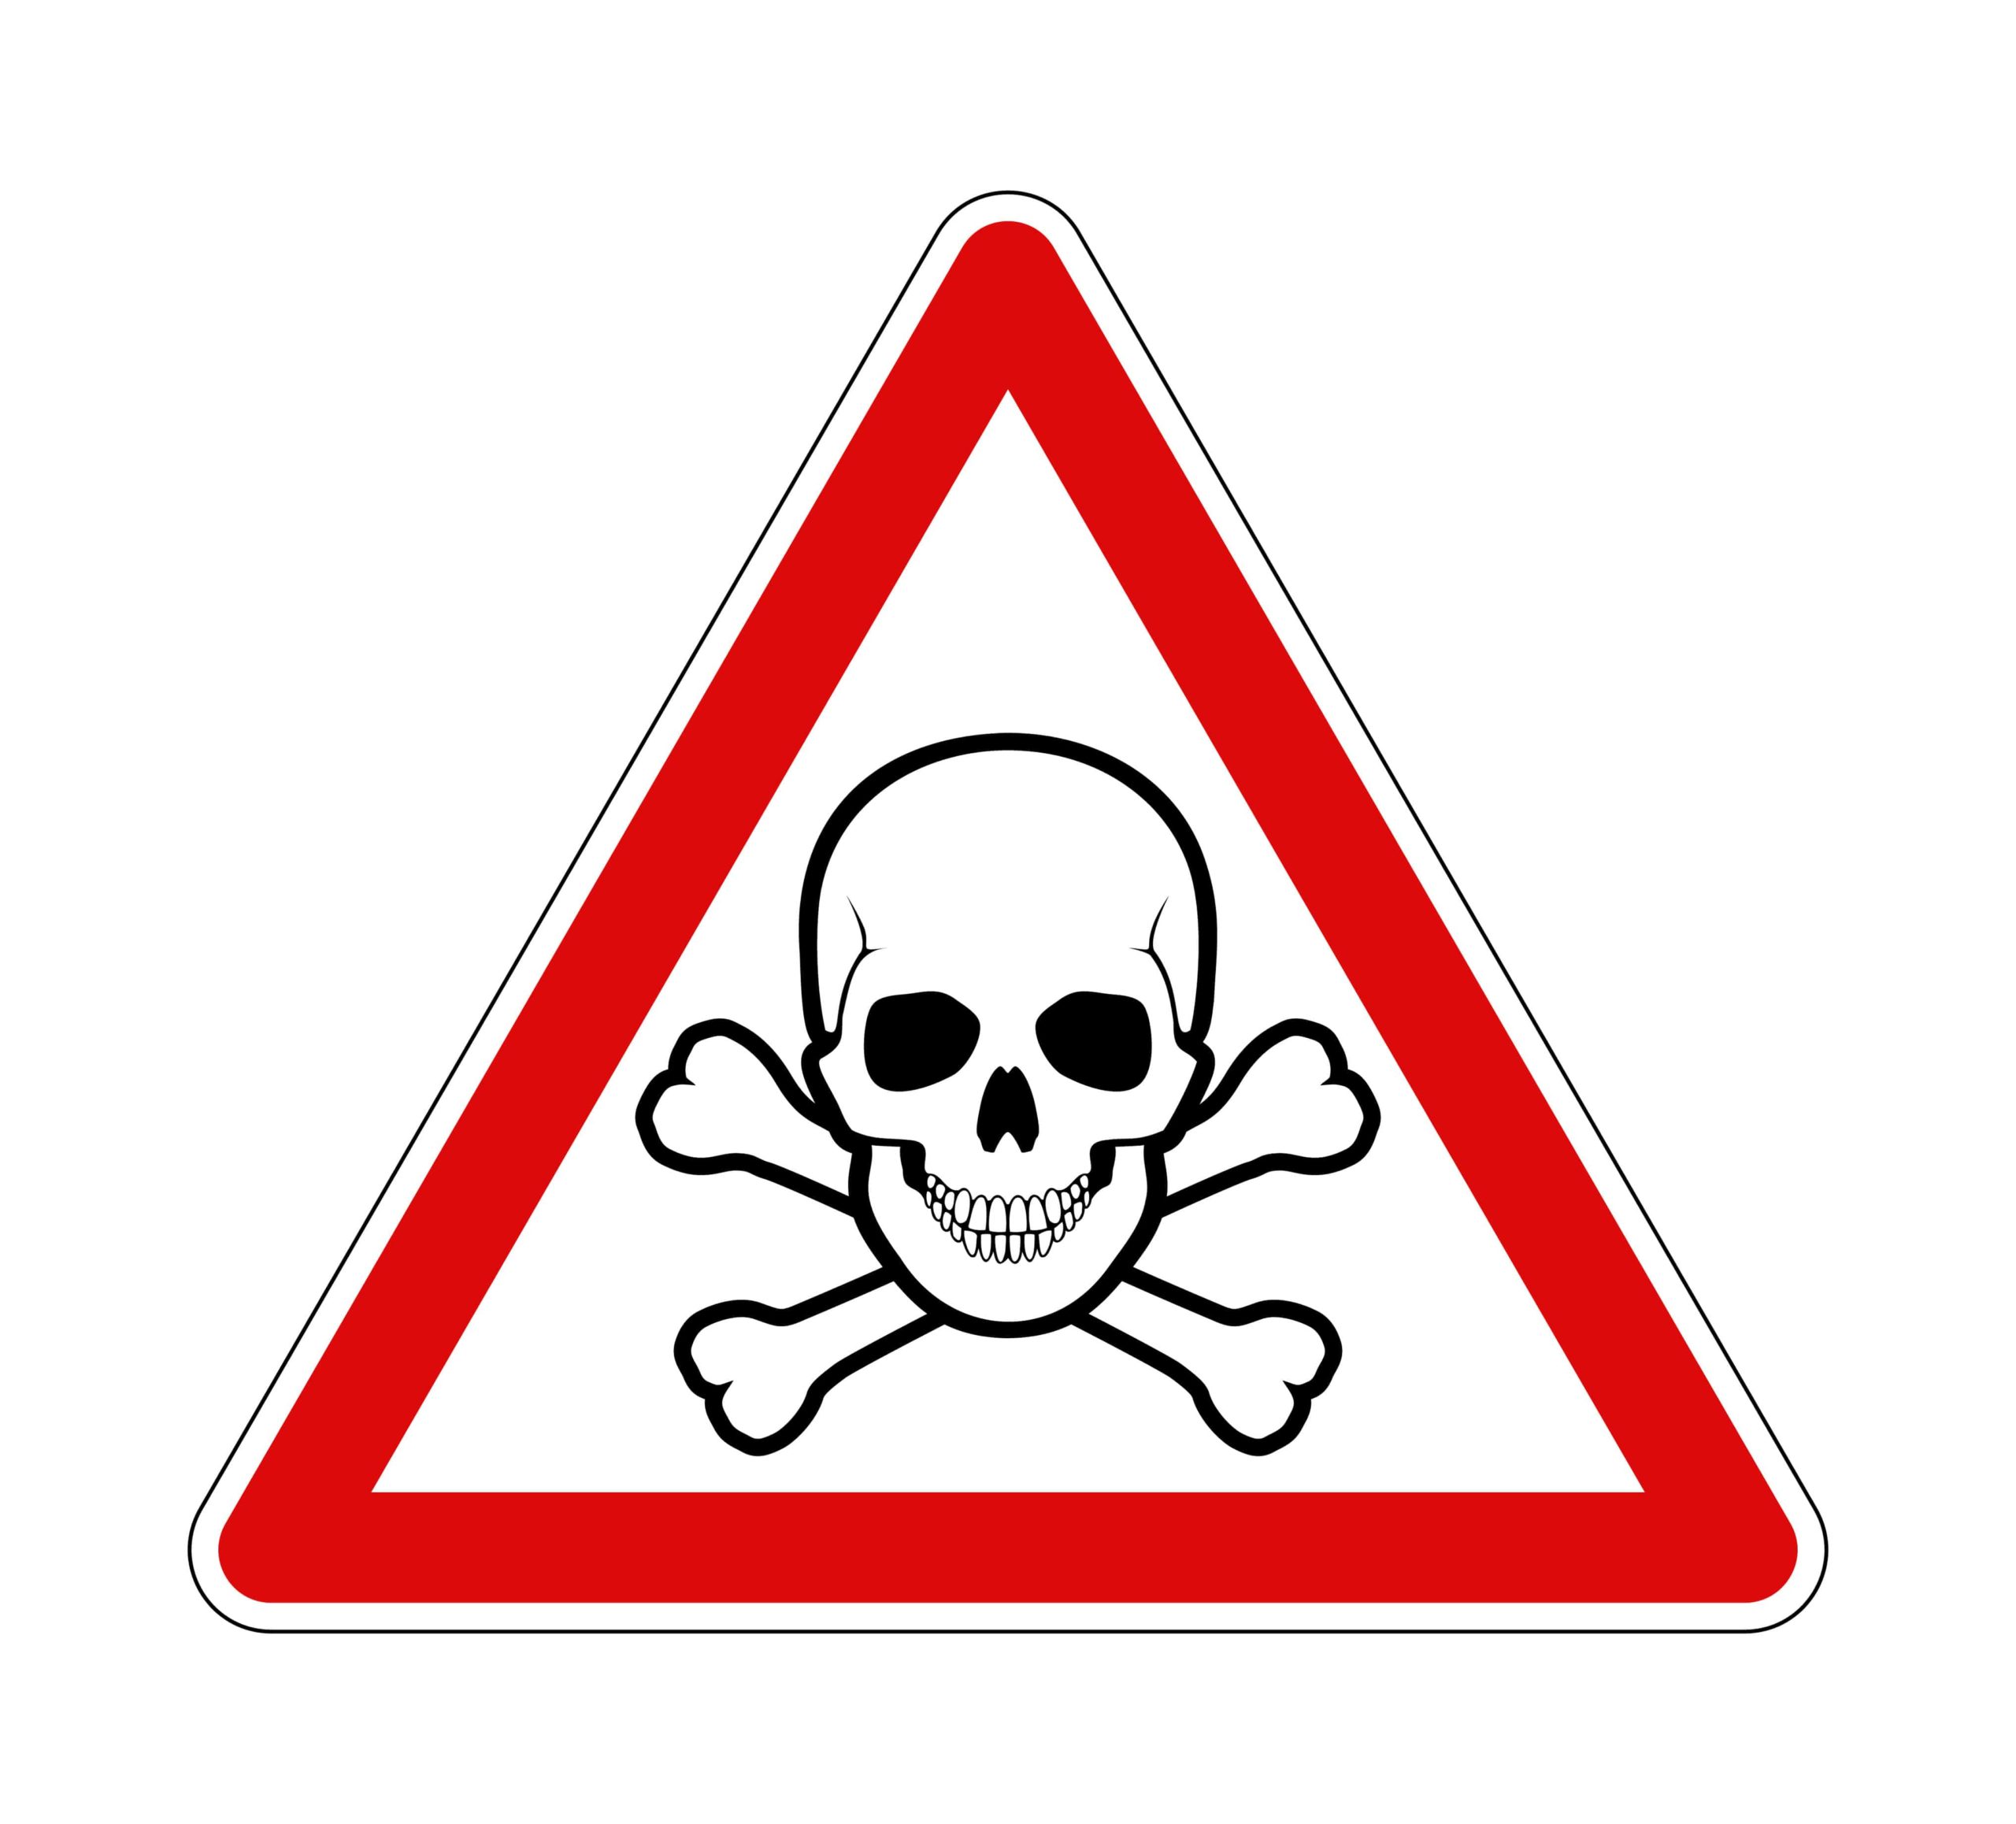 Danger symbol for safety issues